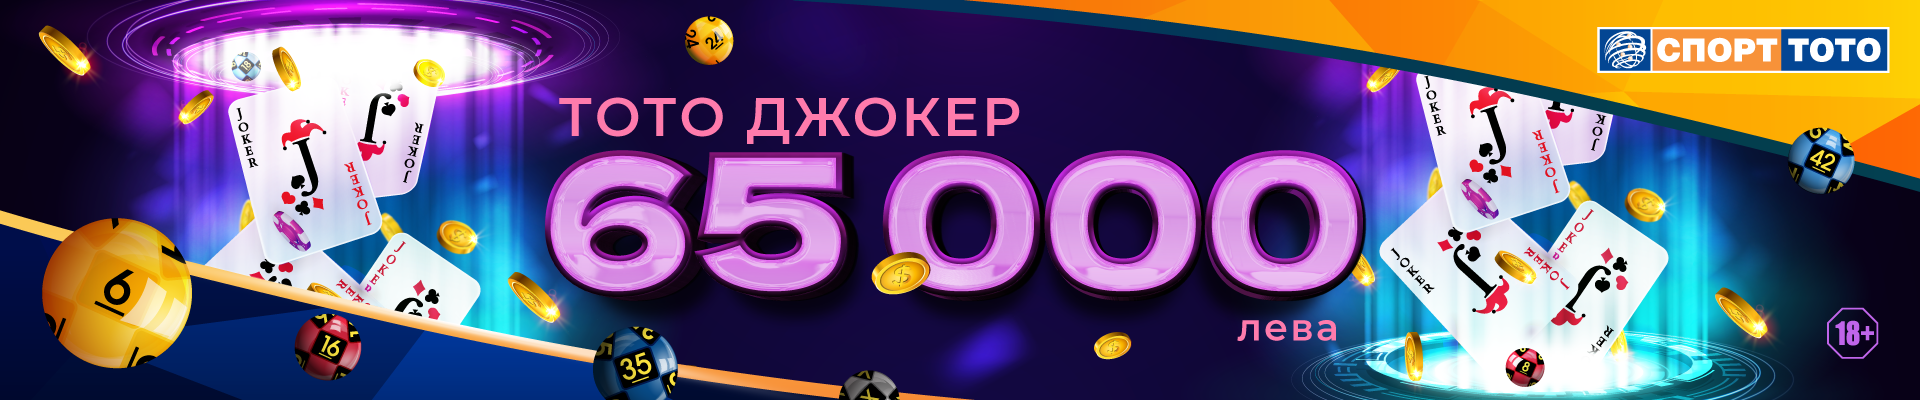 Тото Джокер 65 000